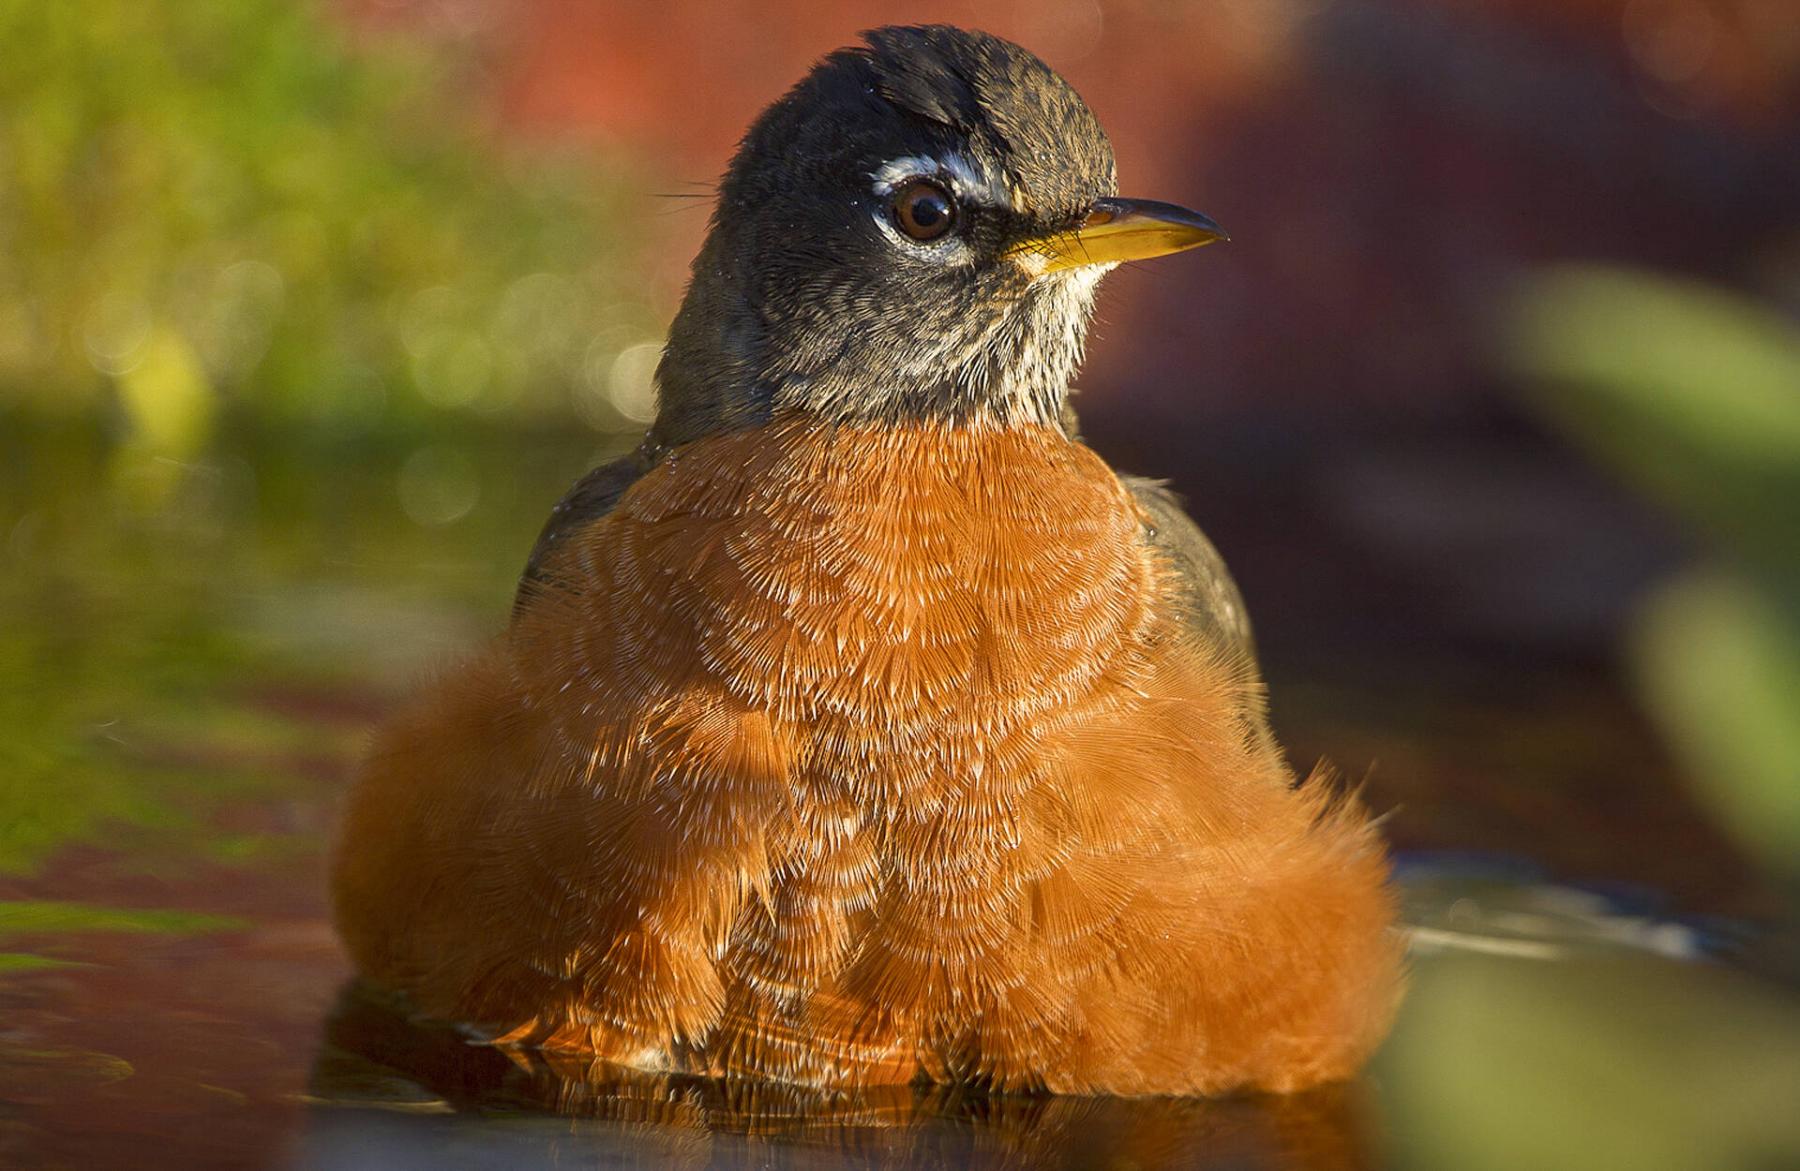  <p>Photos by Dennis Fast</p>
                                <p>Splish, splash, this American robin is enjoying his bath in a backyard stream.</p> 